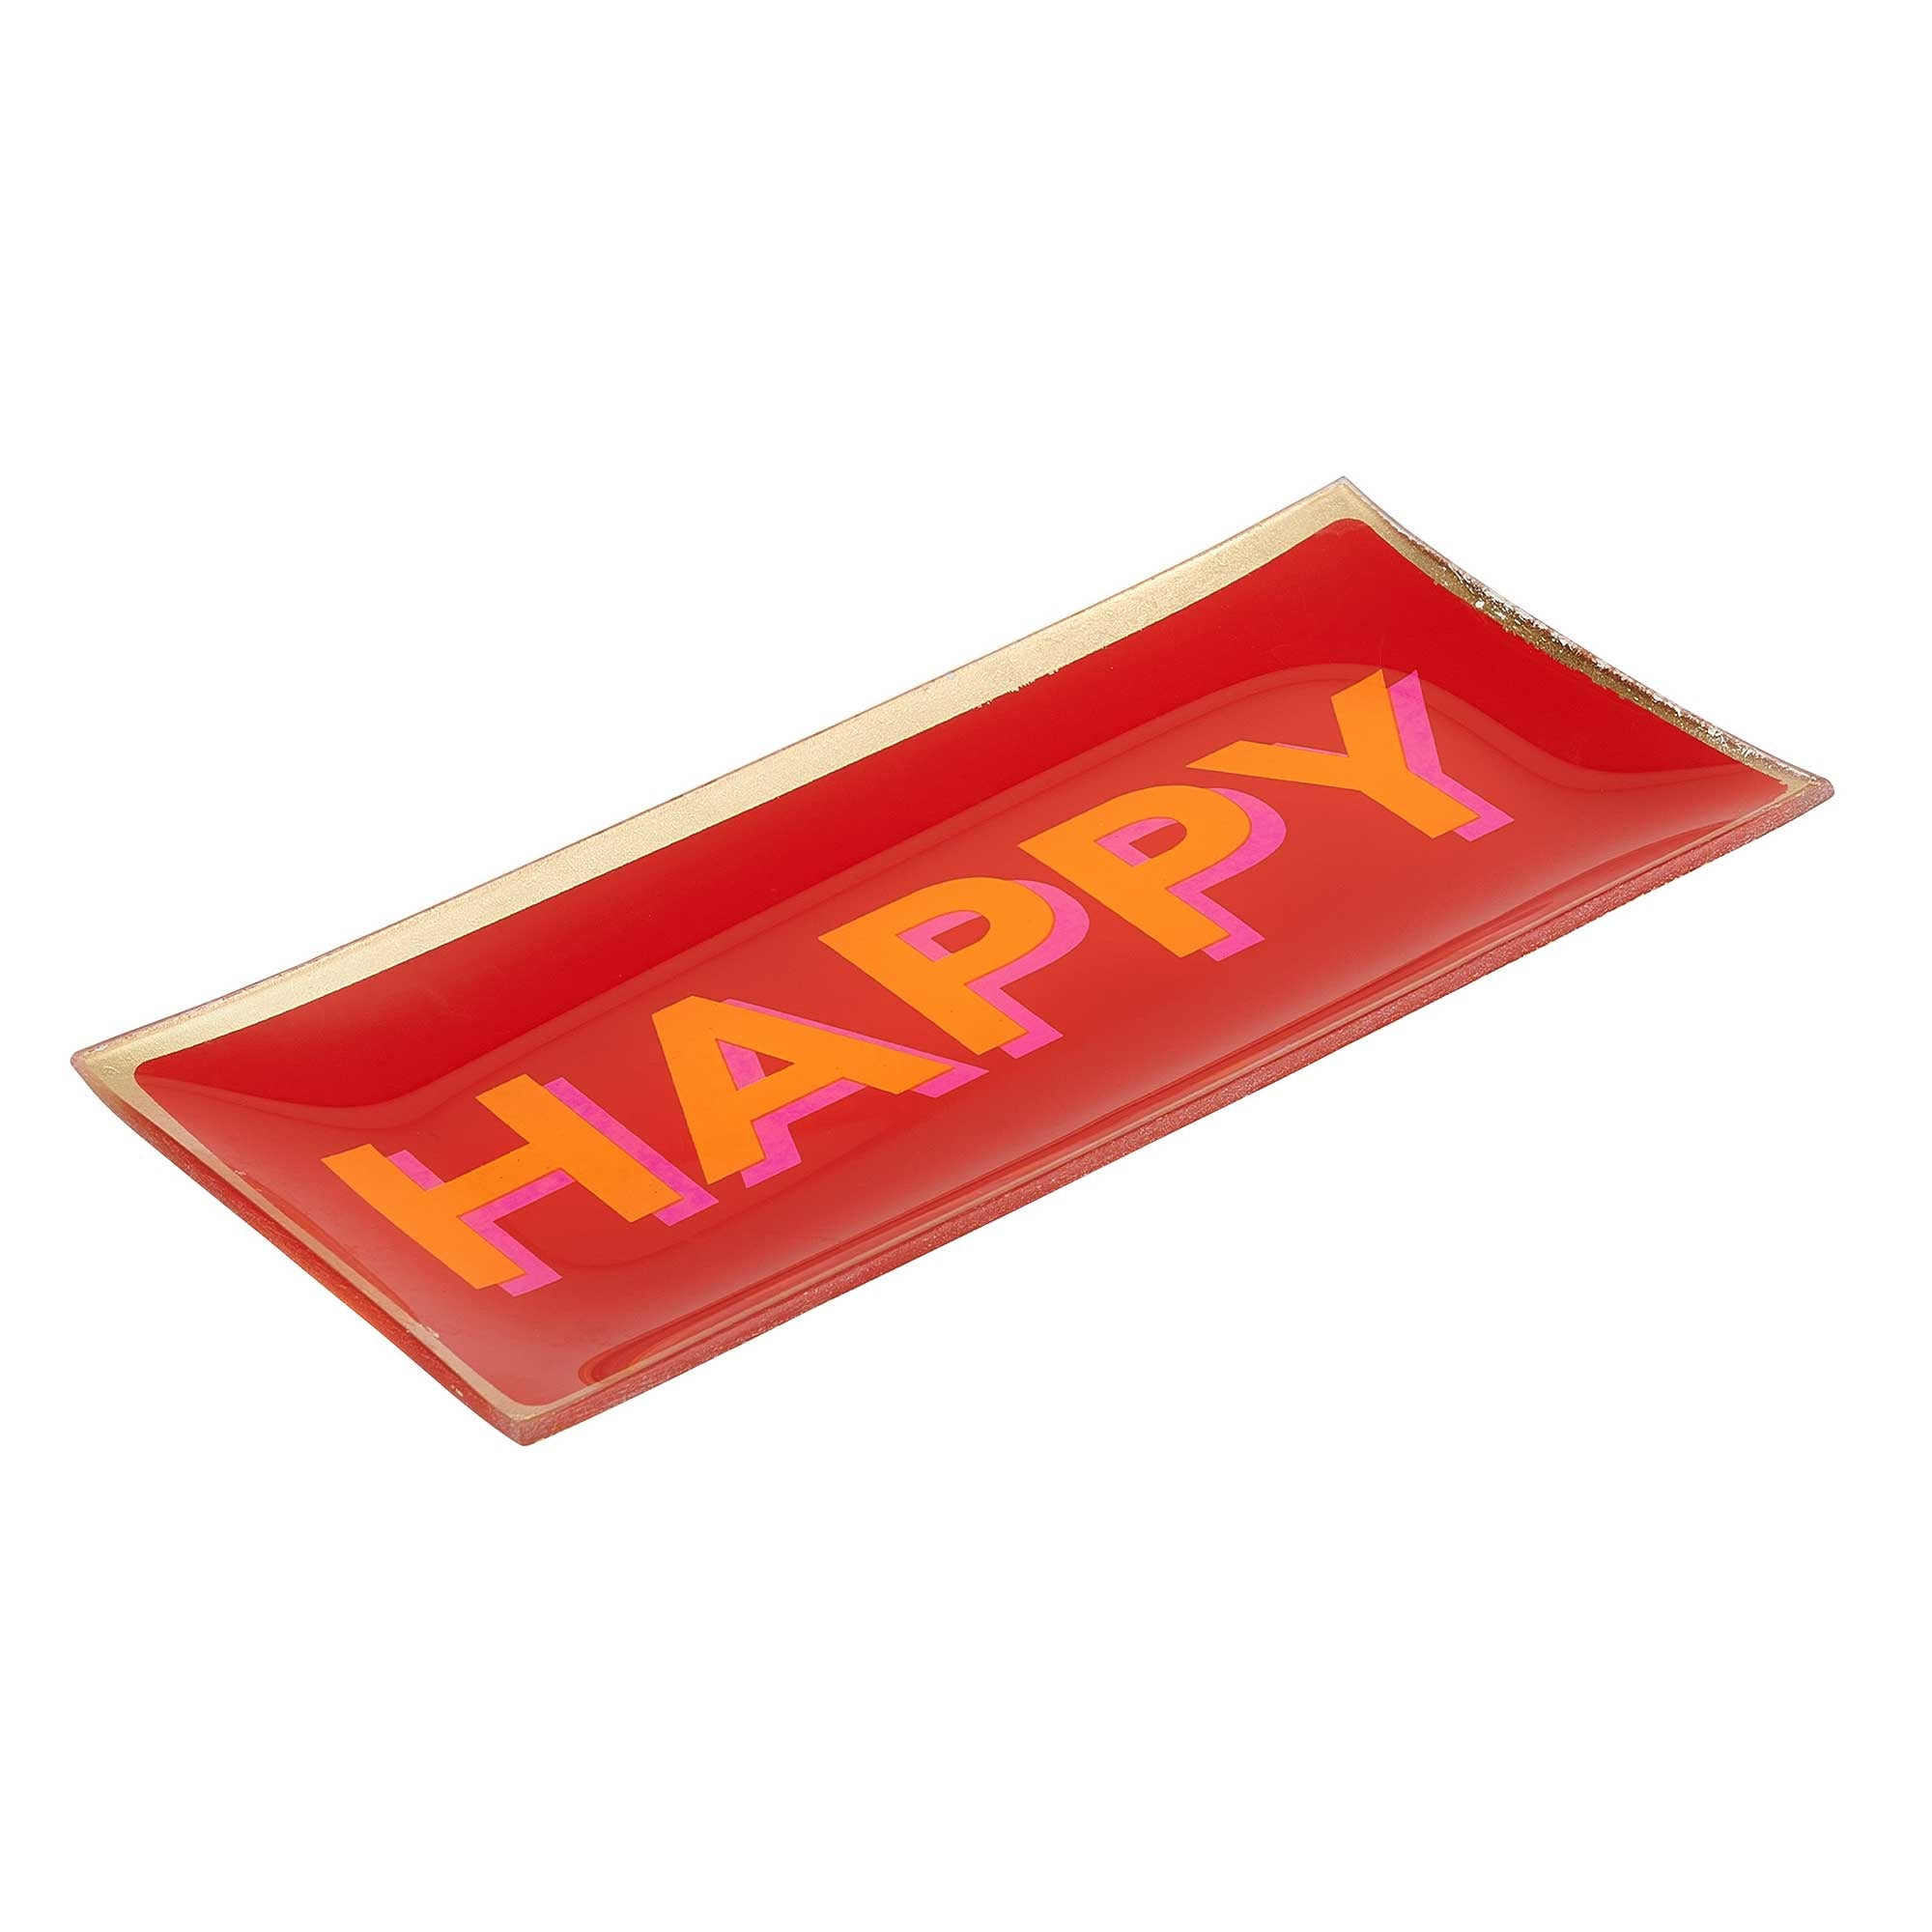 Plato de cristal "HAPPY" rojo